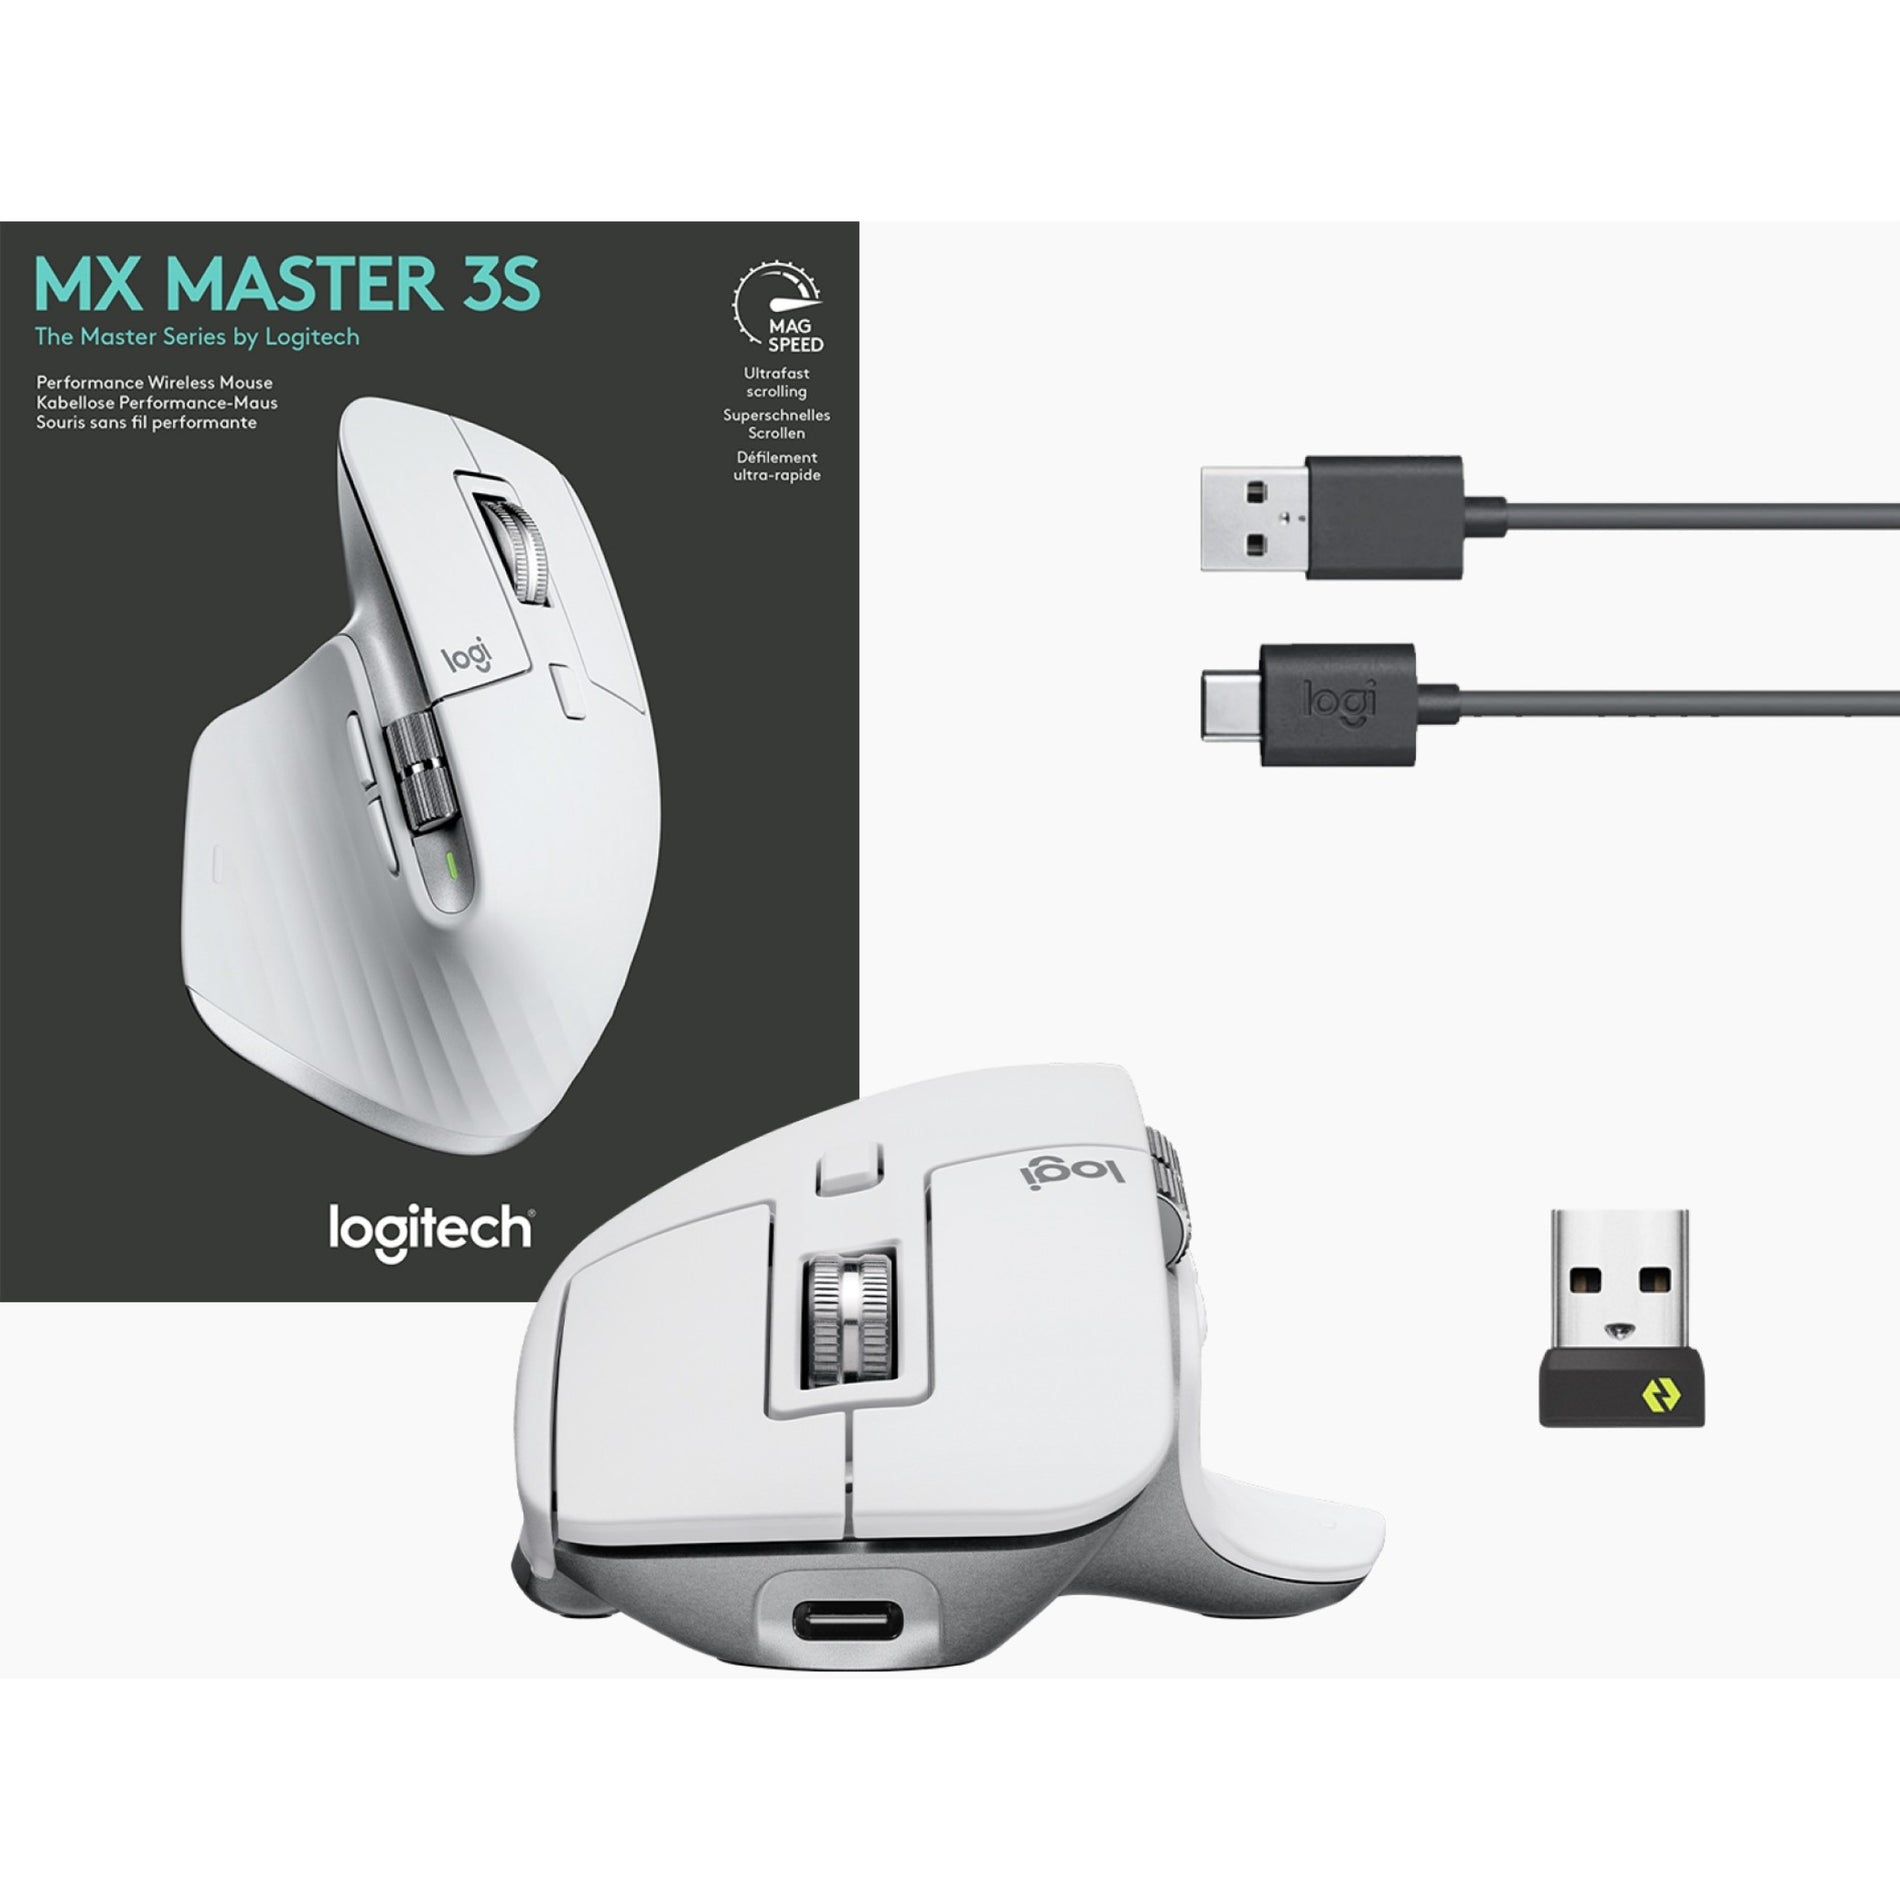 Logitech MX Master 2S - mouse - Bluetooth, 2.4 GHz - graphite - 910-005965  - Mice 